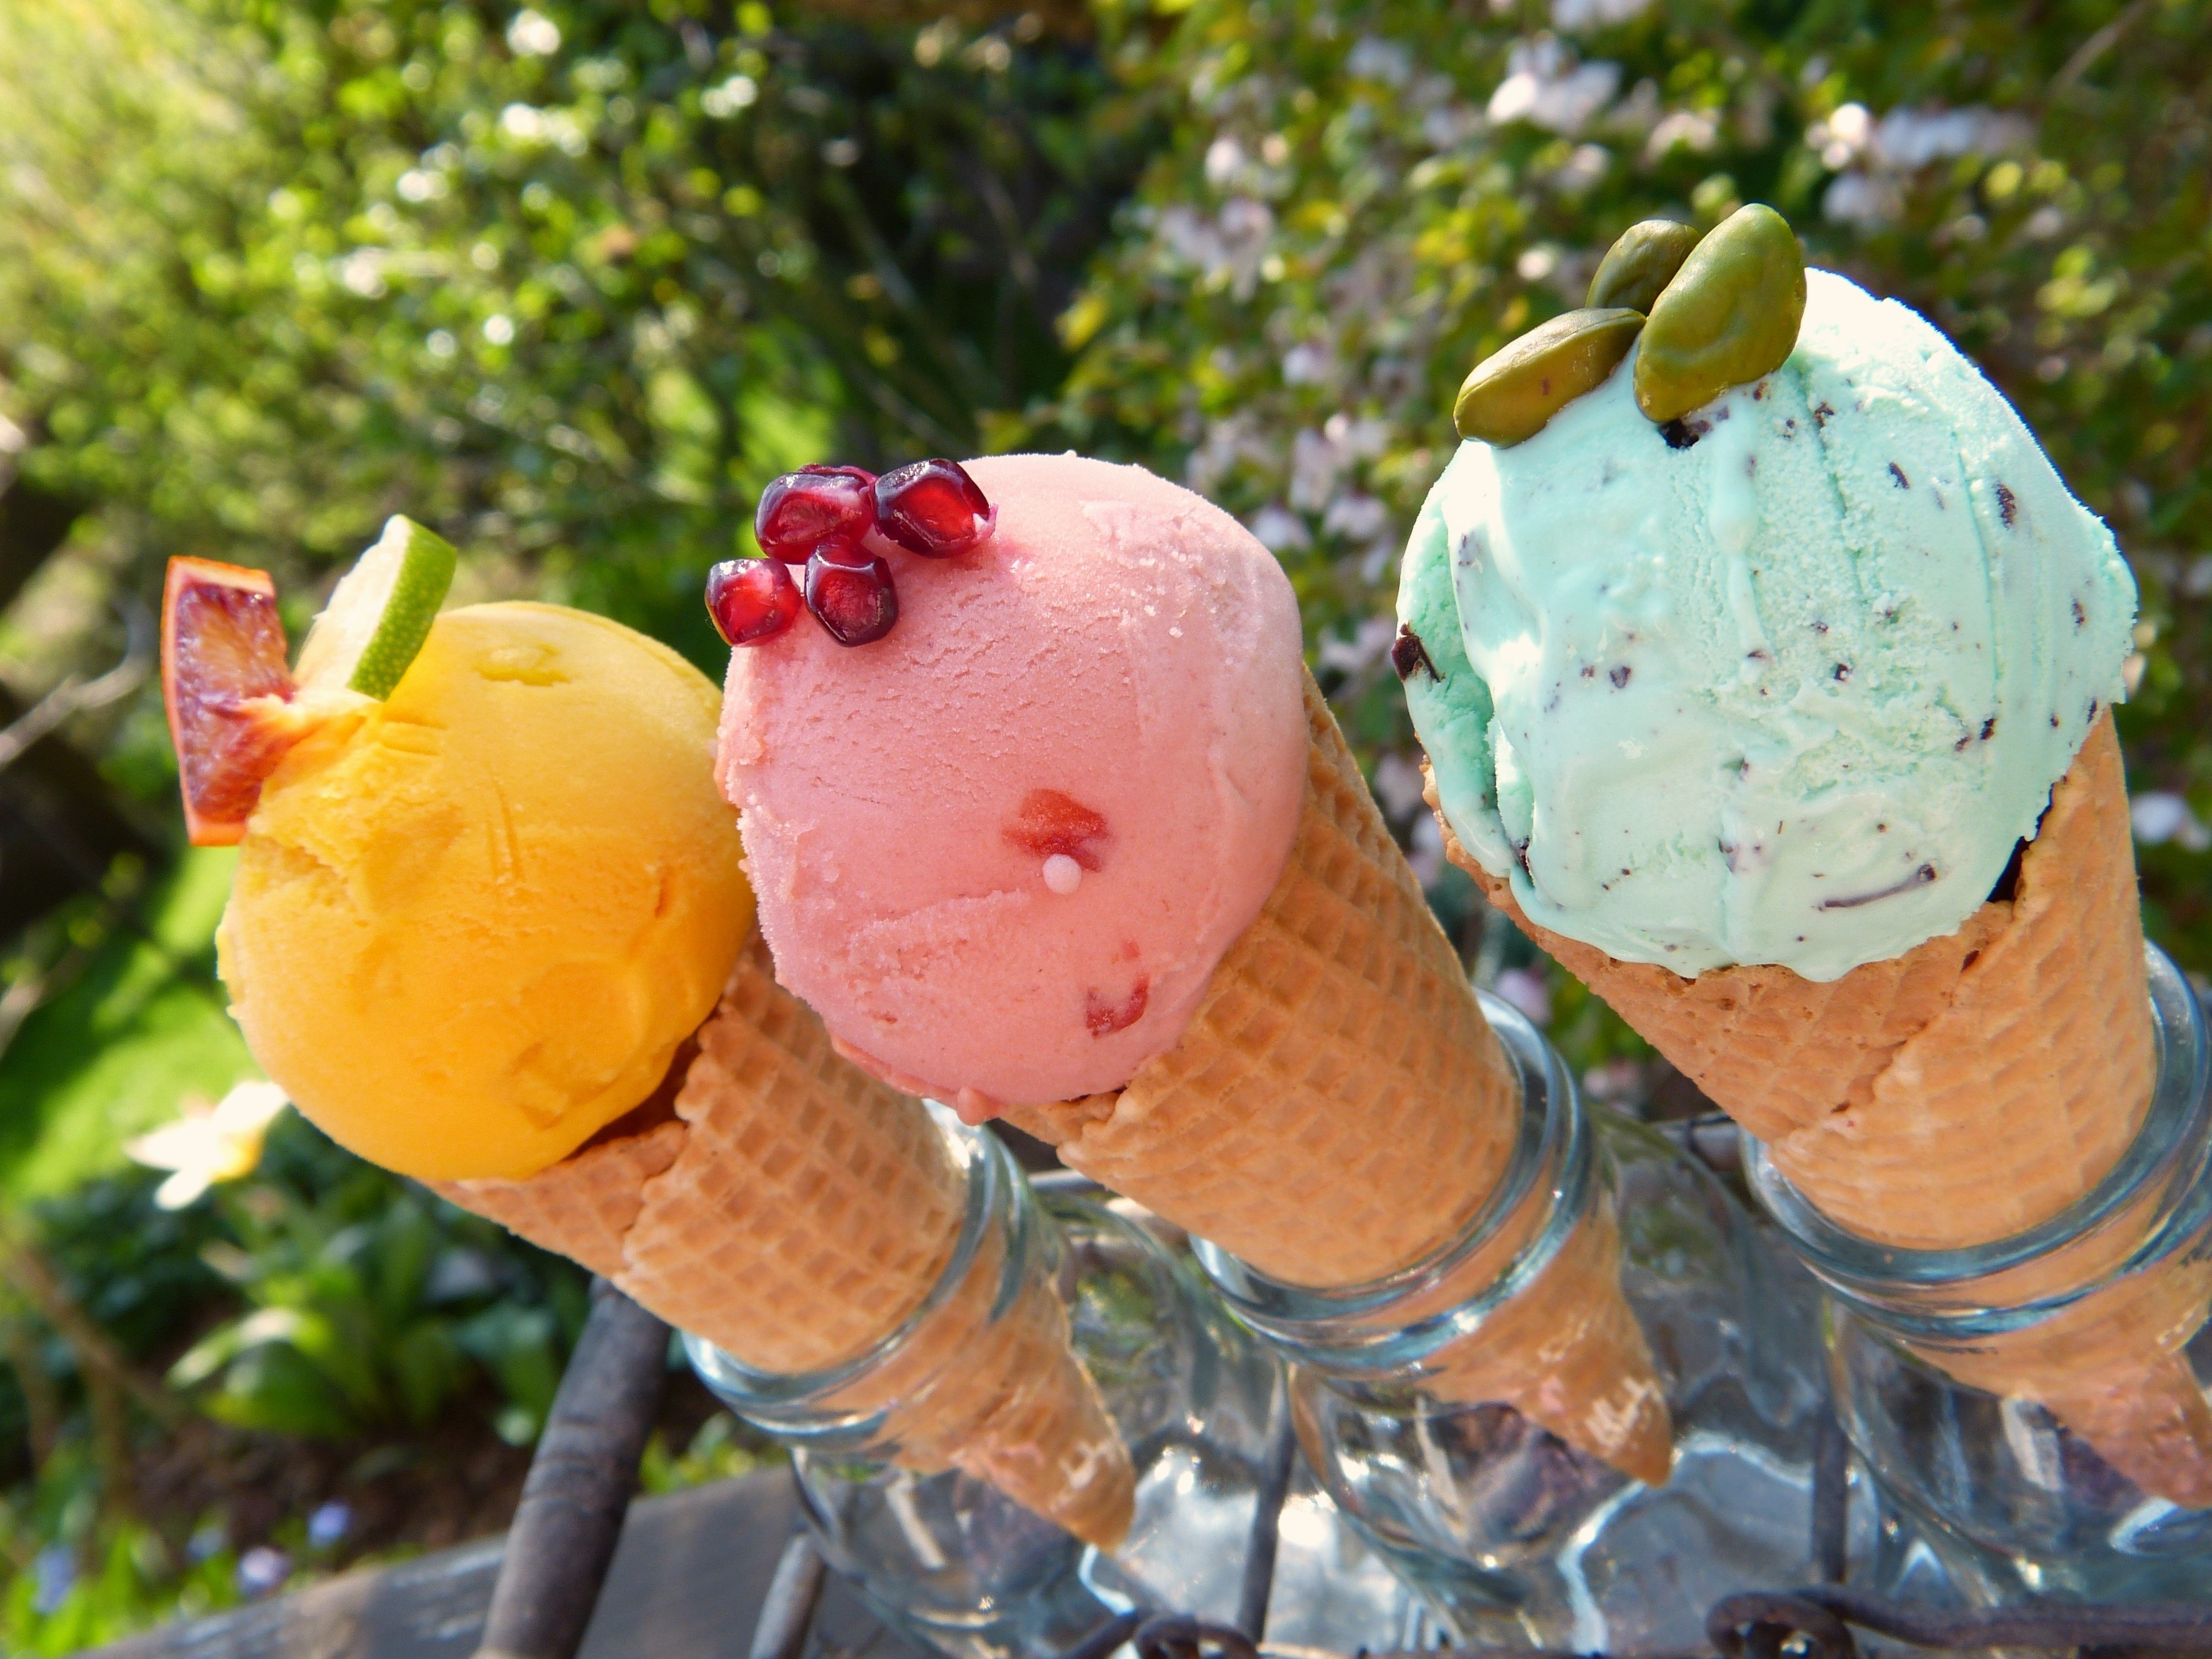 Мороженка на двоих. Айс Крим мороженщик. Красивое мороженое. Натуральное мороженое. Мороженое в пластиковых фруктах.